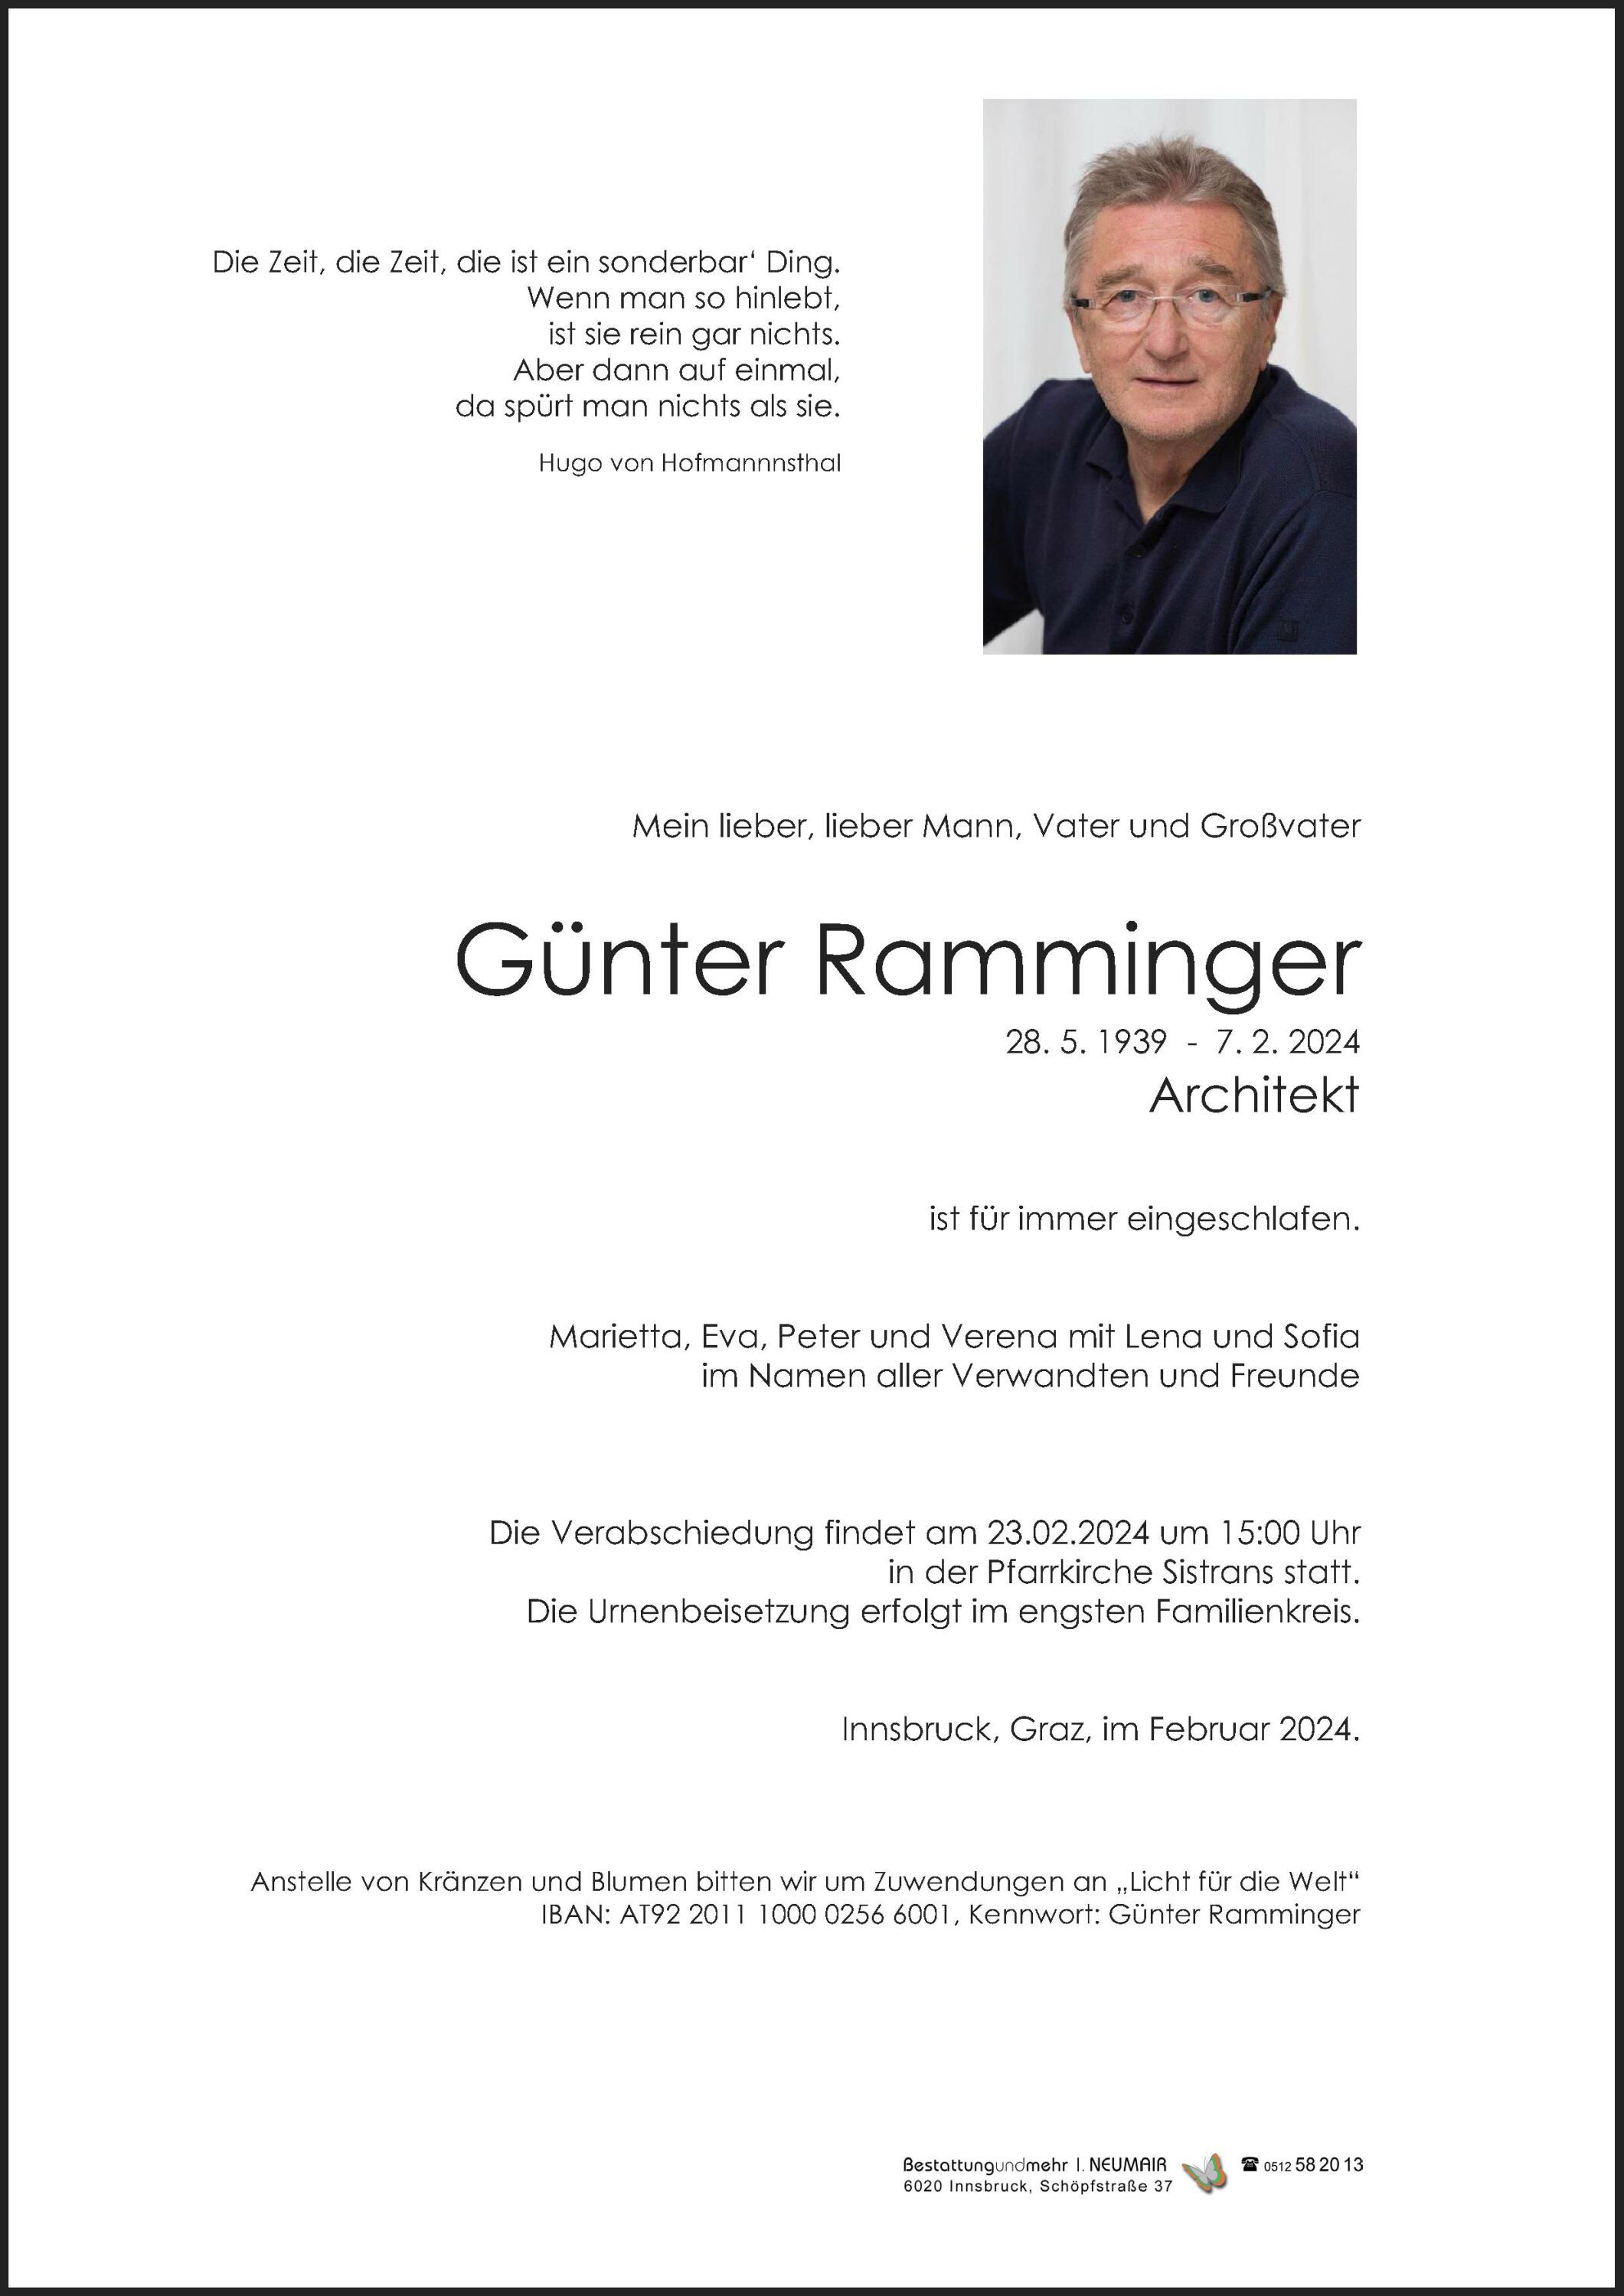 Günter Ramminger